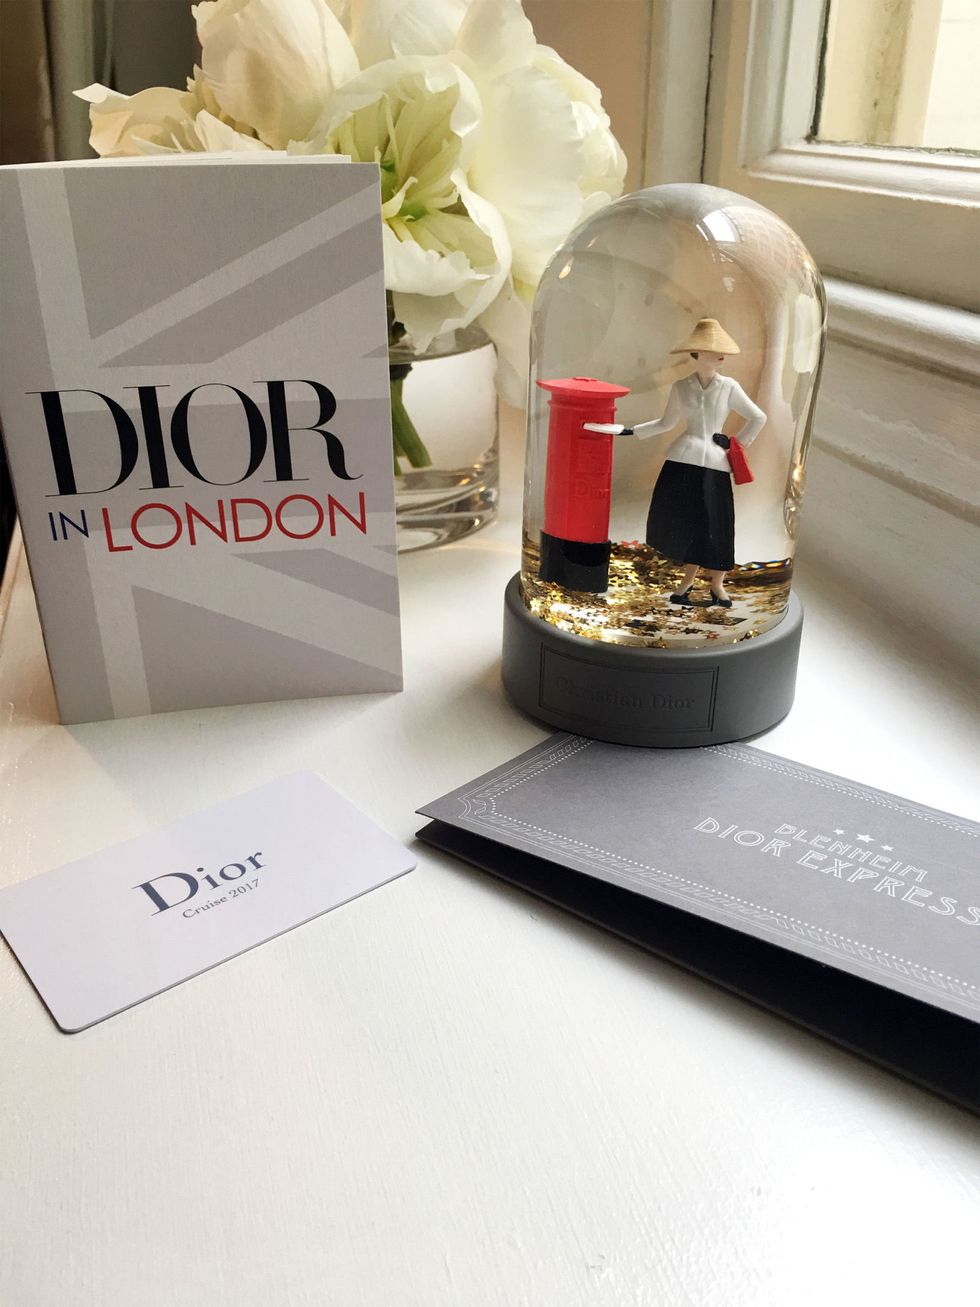 Chiara Ferragni Dior Cruise Fashion Show Diary in London - Chiara Ferragni  of The Blonde Salad at Dior Cruise 2017